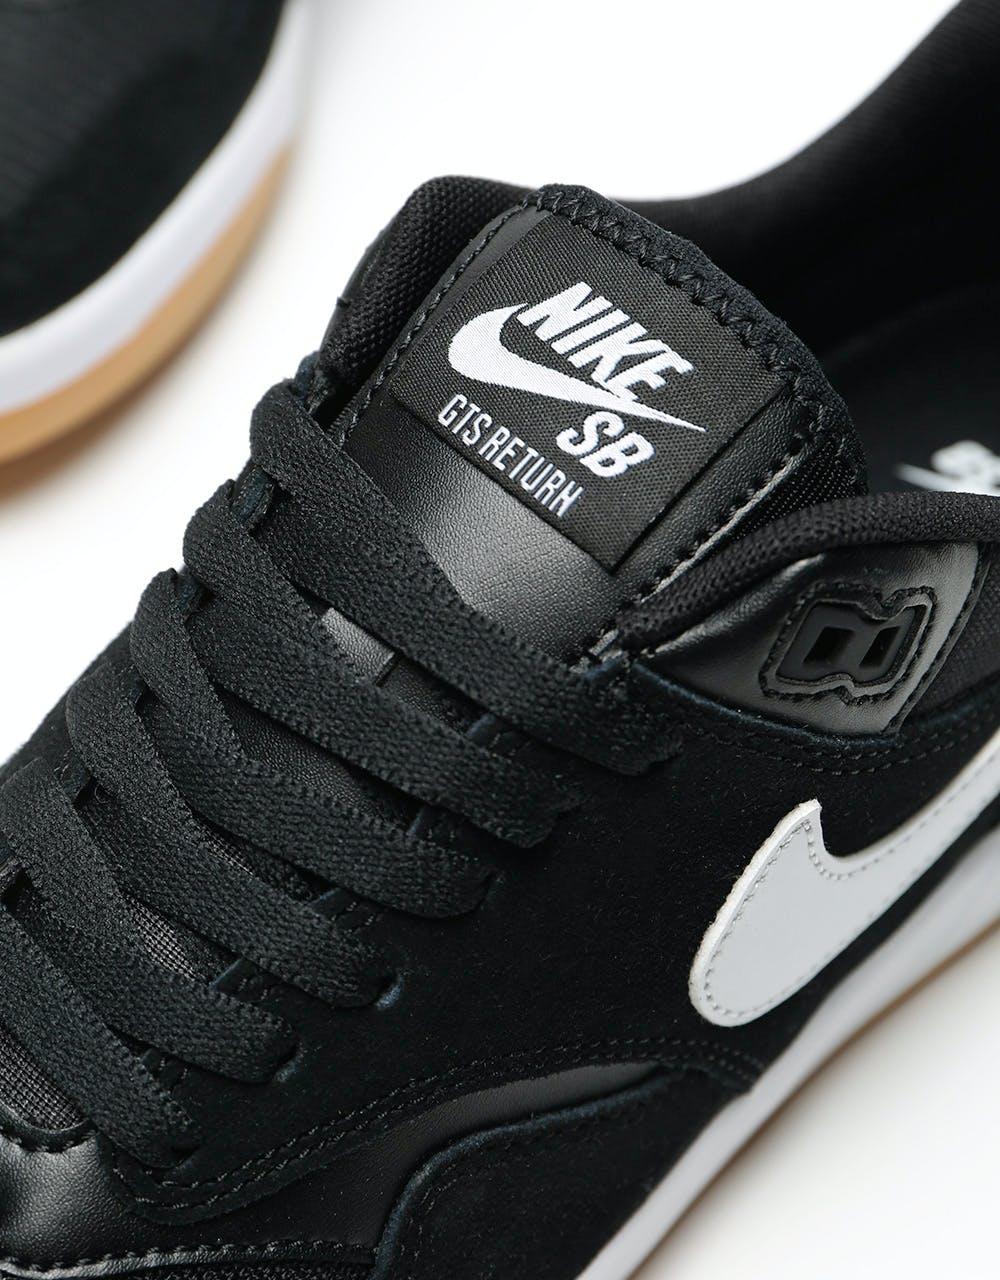 Nike SB GTS Return Skate Shoes - Black/White-Black-Gum Light Brown